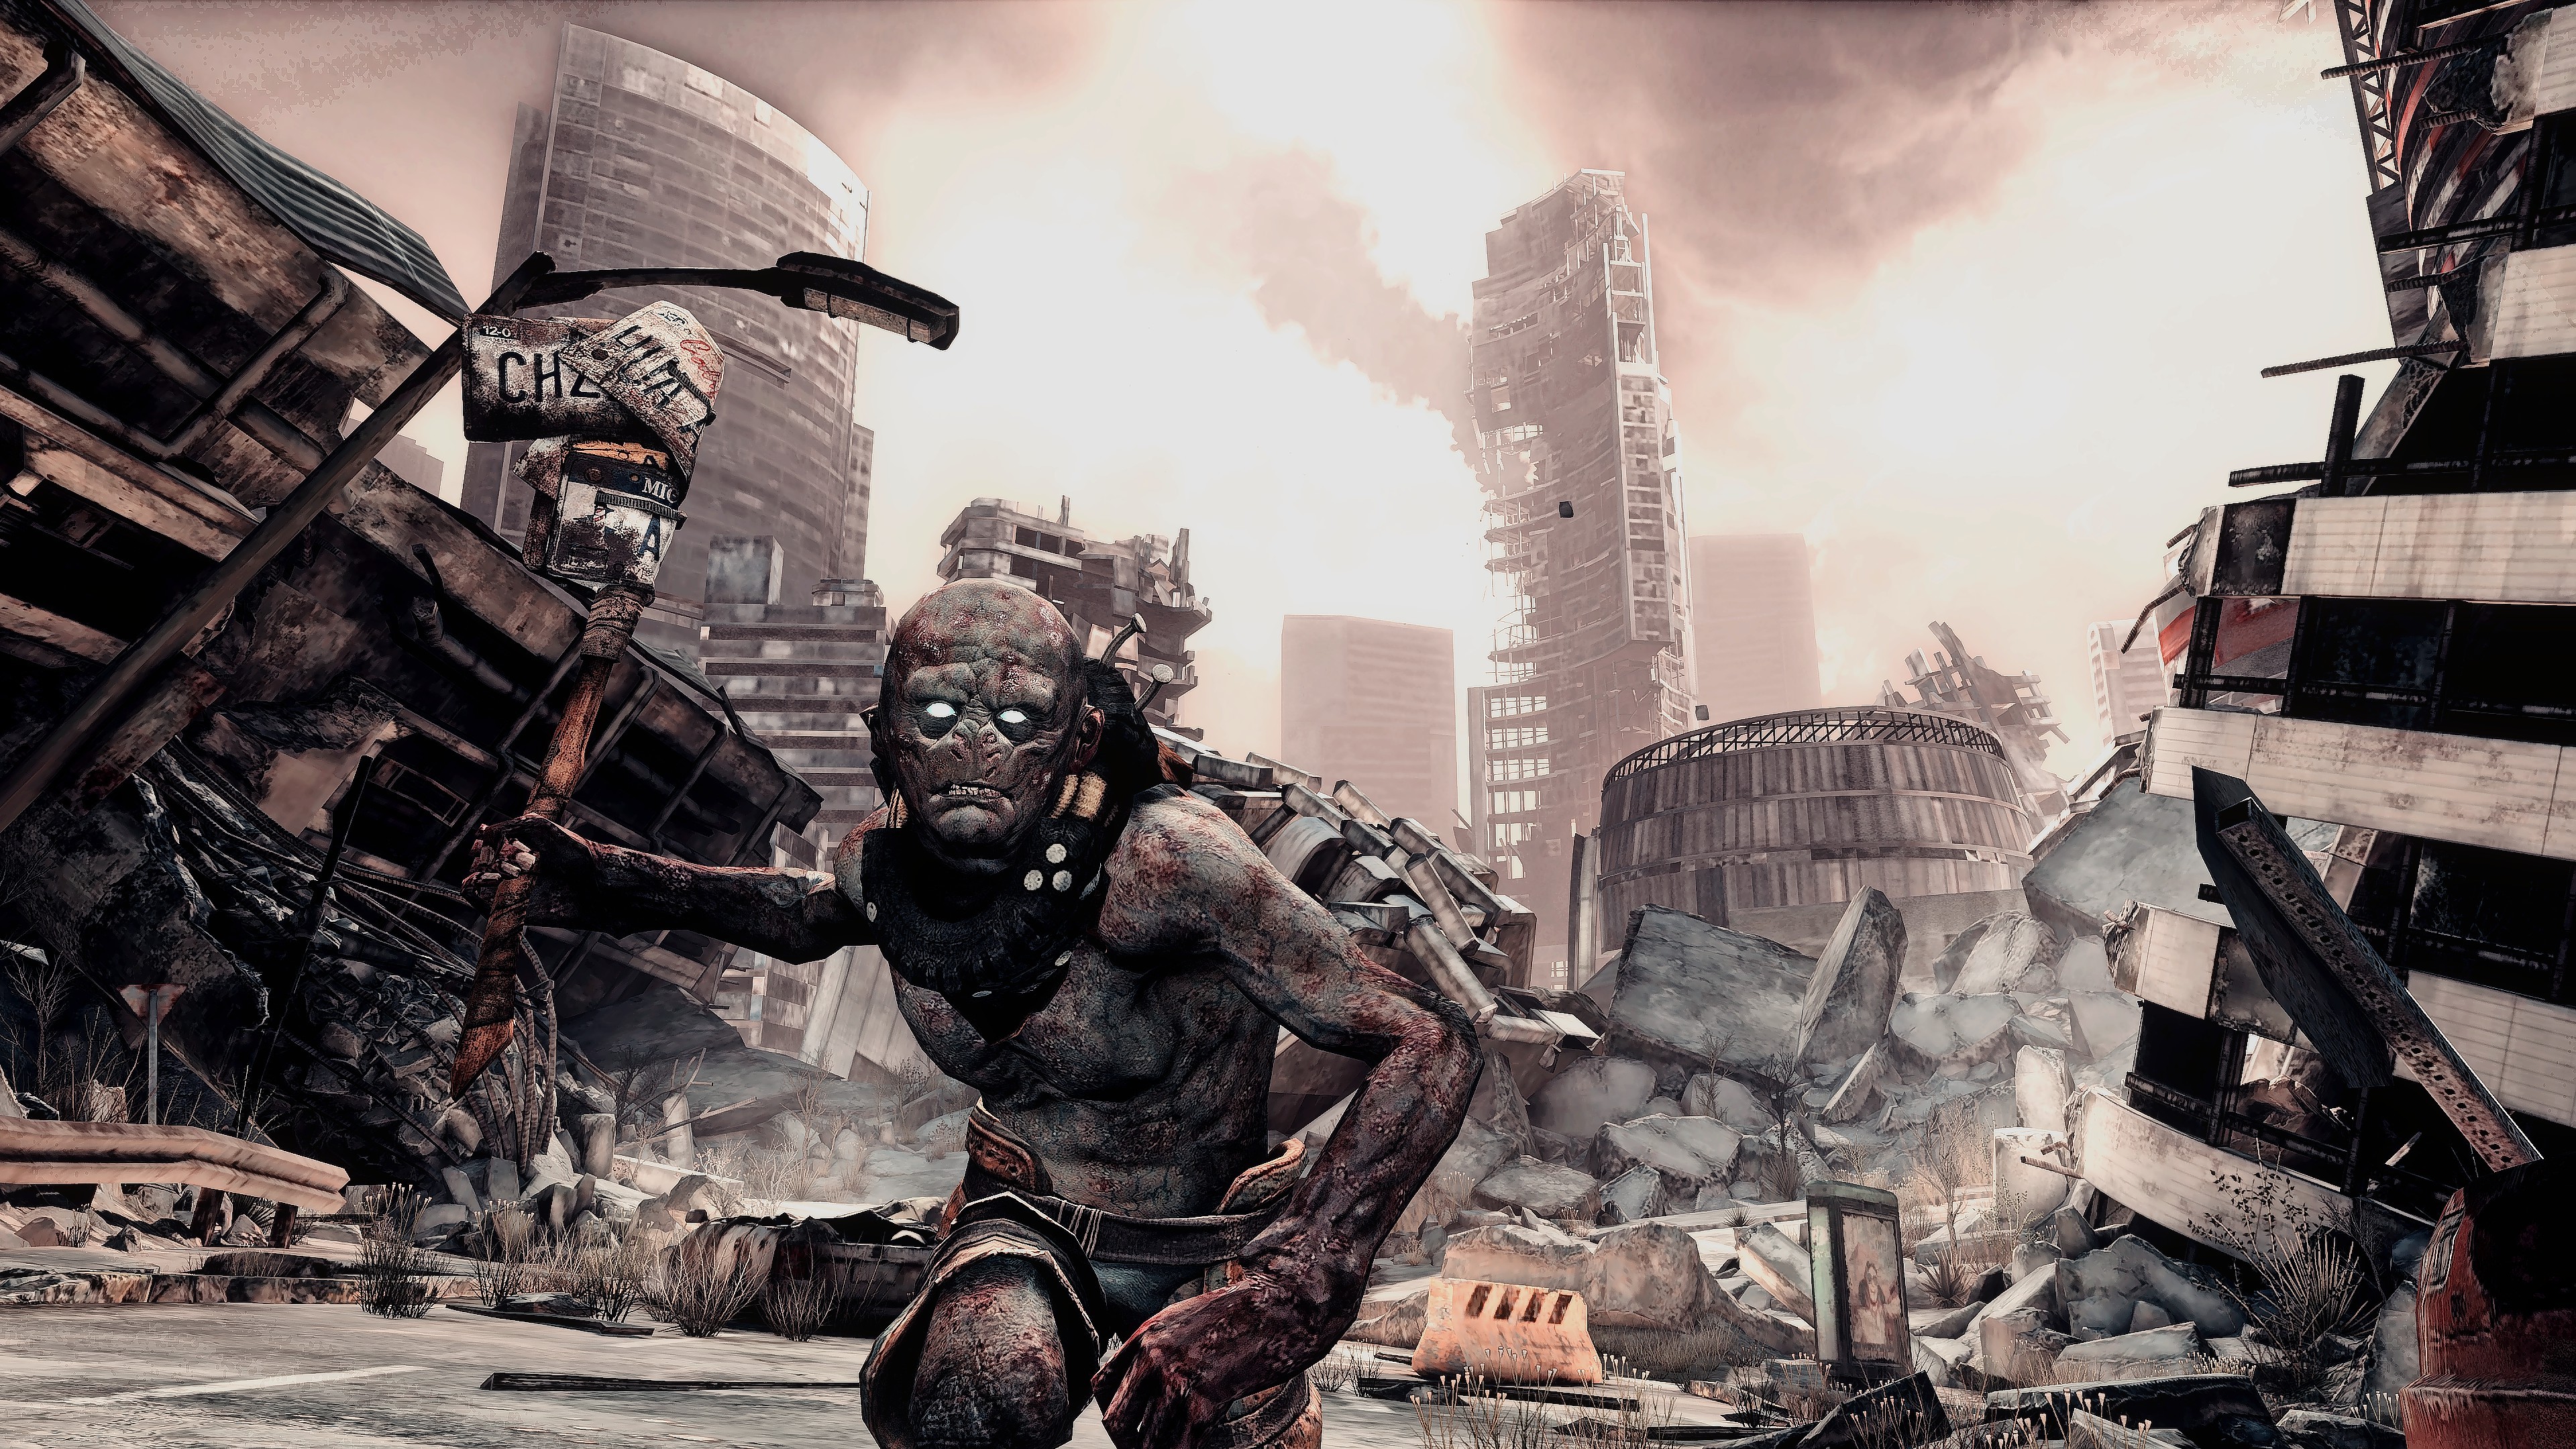 General 3840x2160 Mutant apocalyptic ruins creature science fiction futuristic digital art